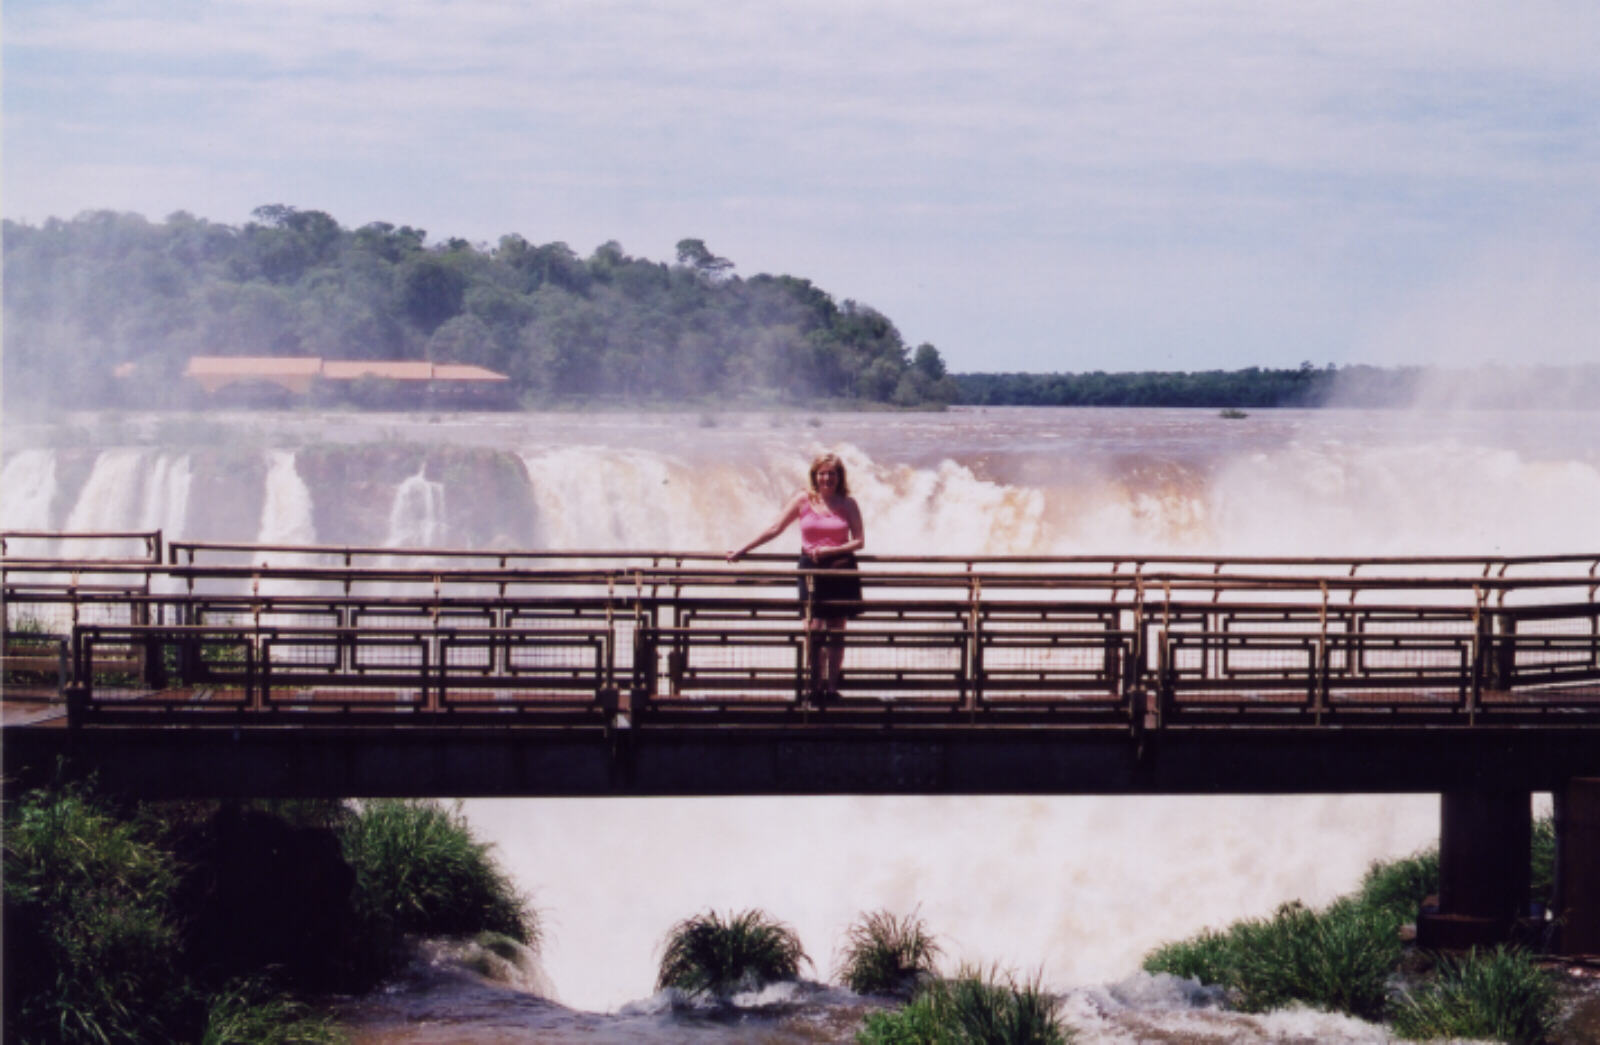 The Garganta del Diablo, Iguazu Falls, Argentina